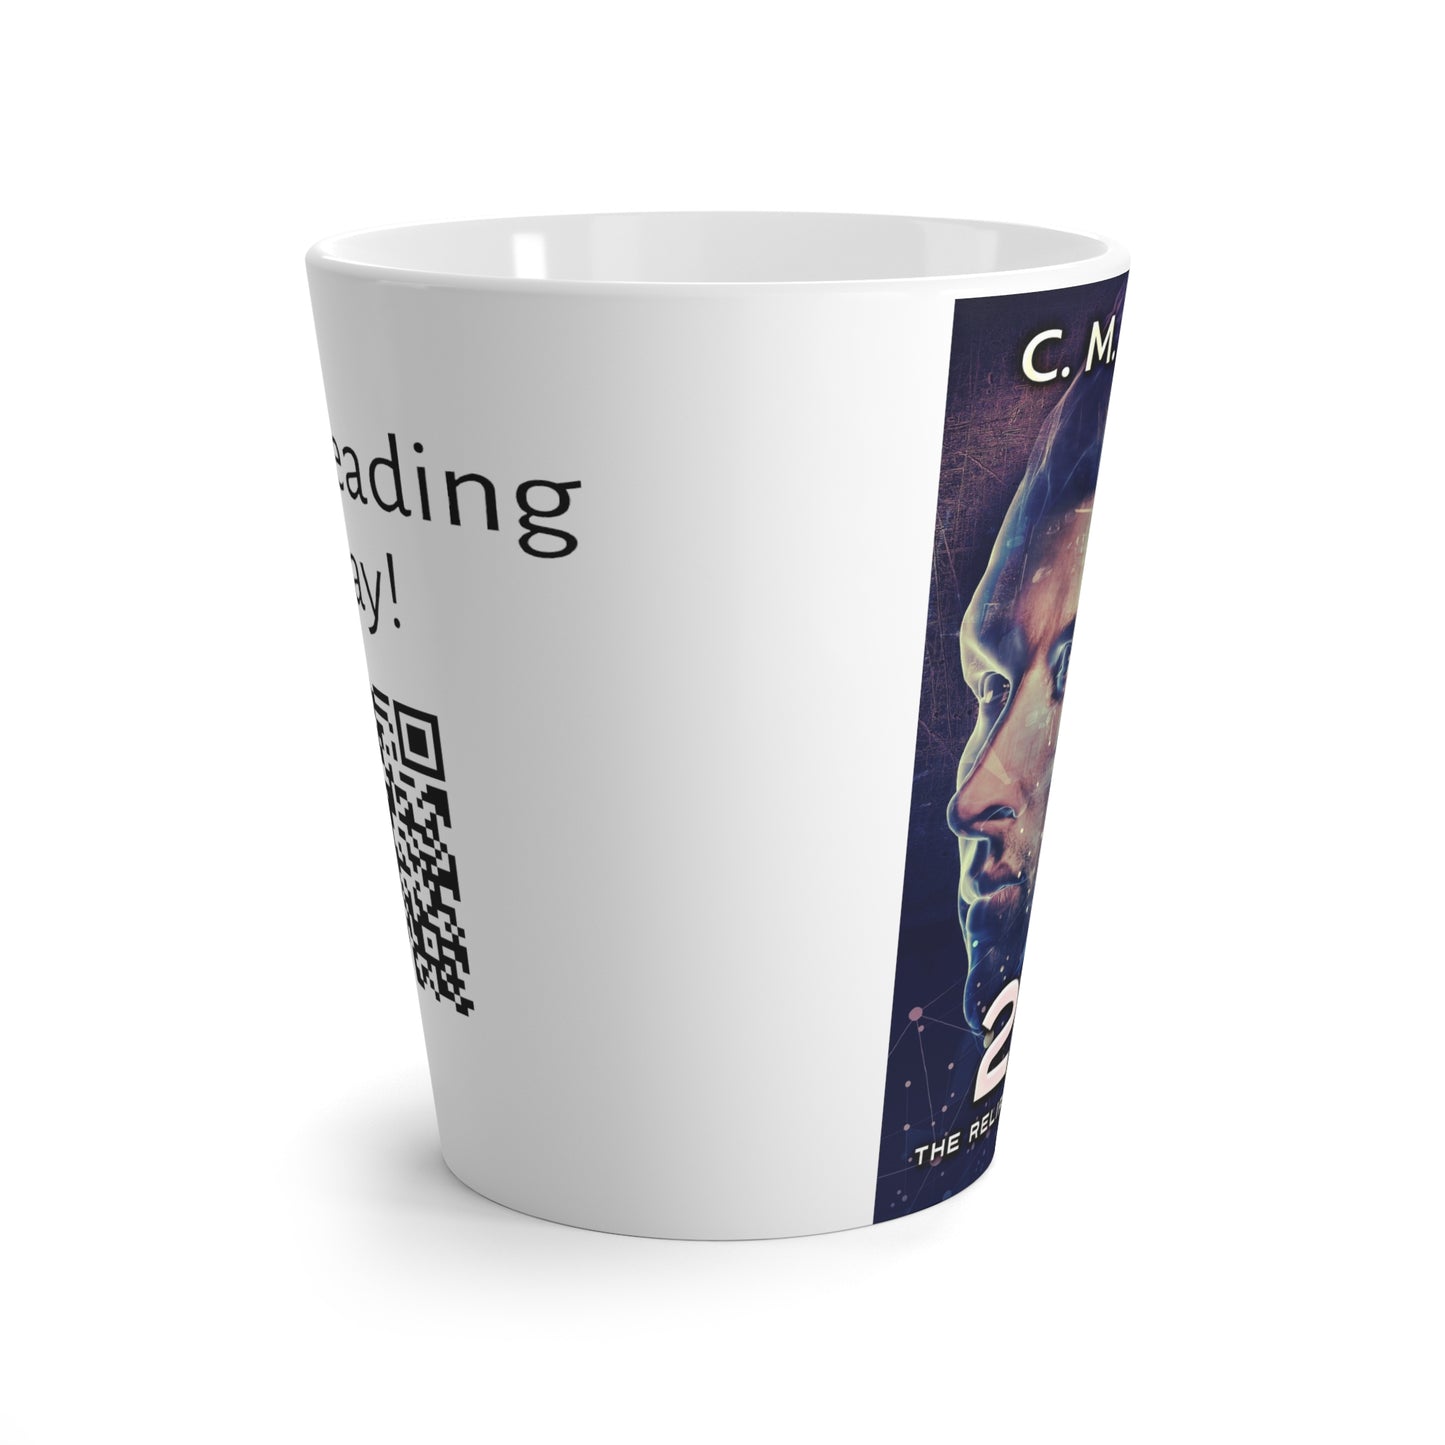 2156 - Latte Mug